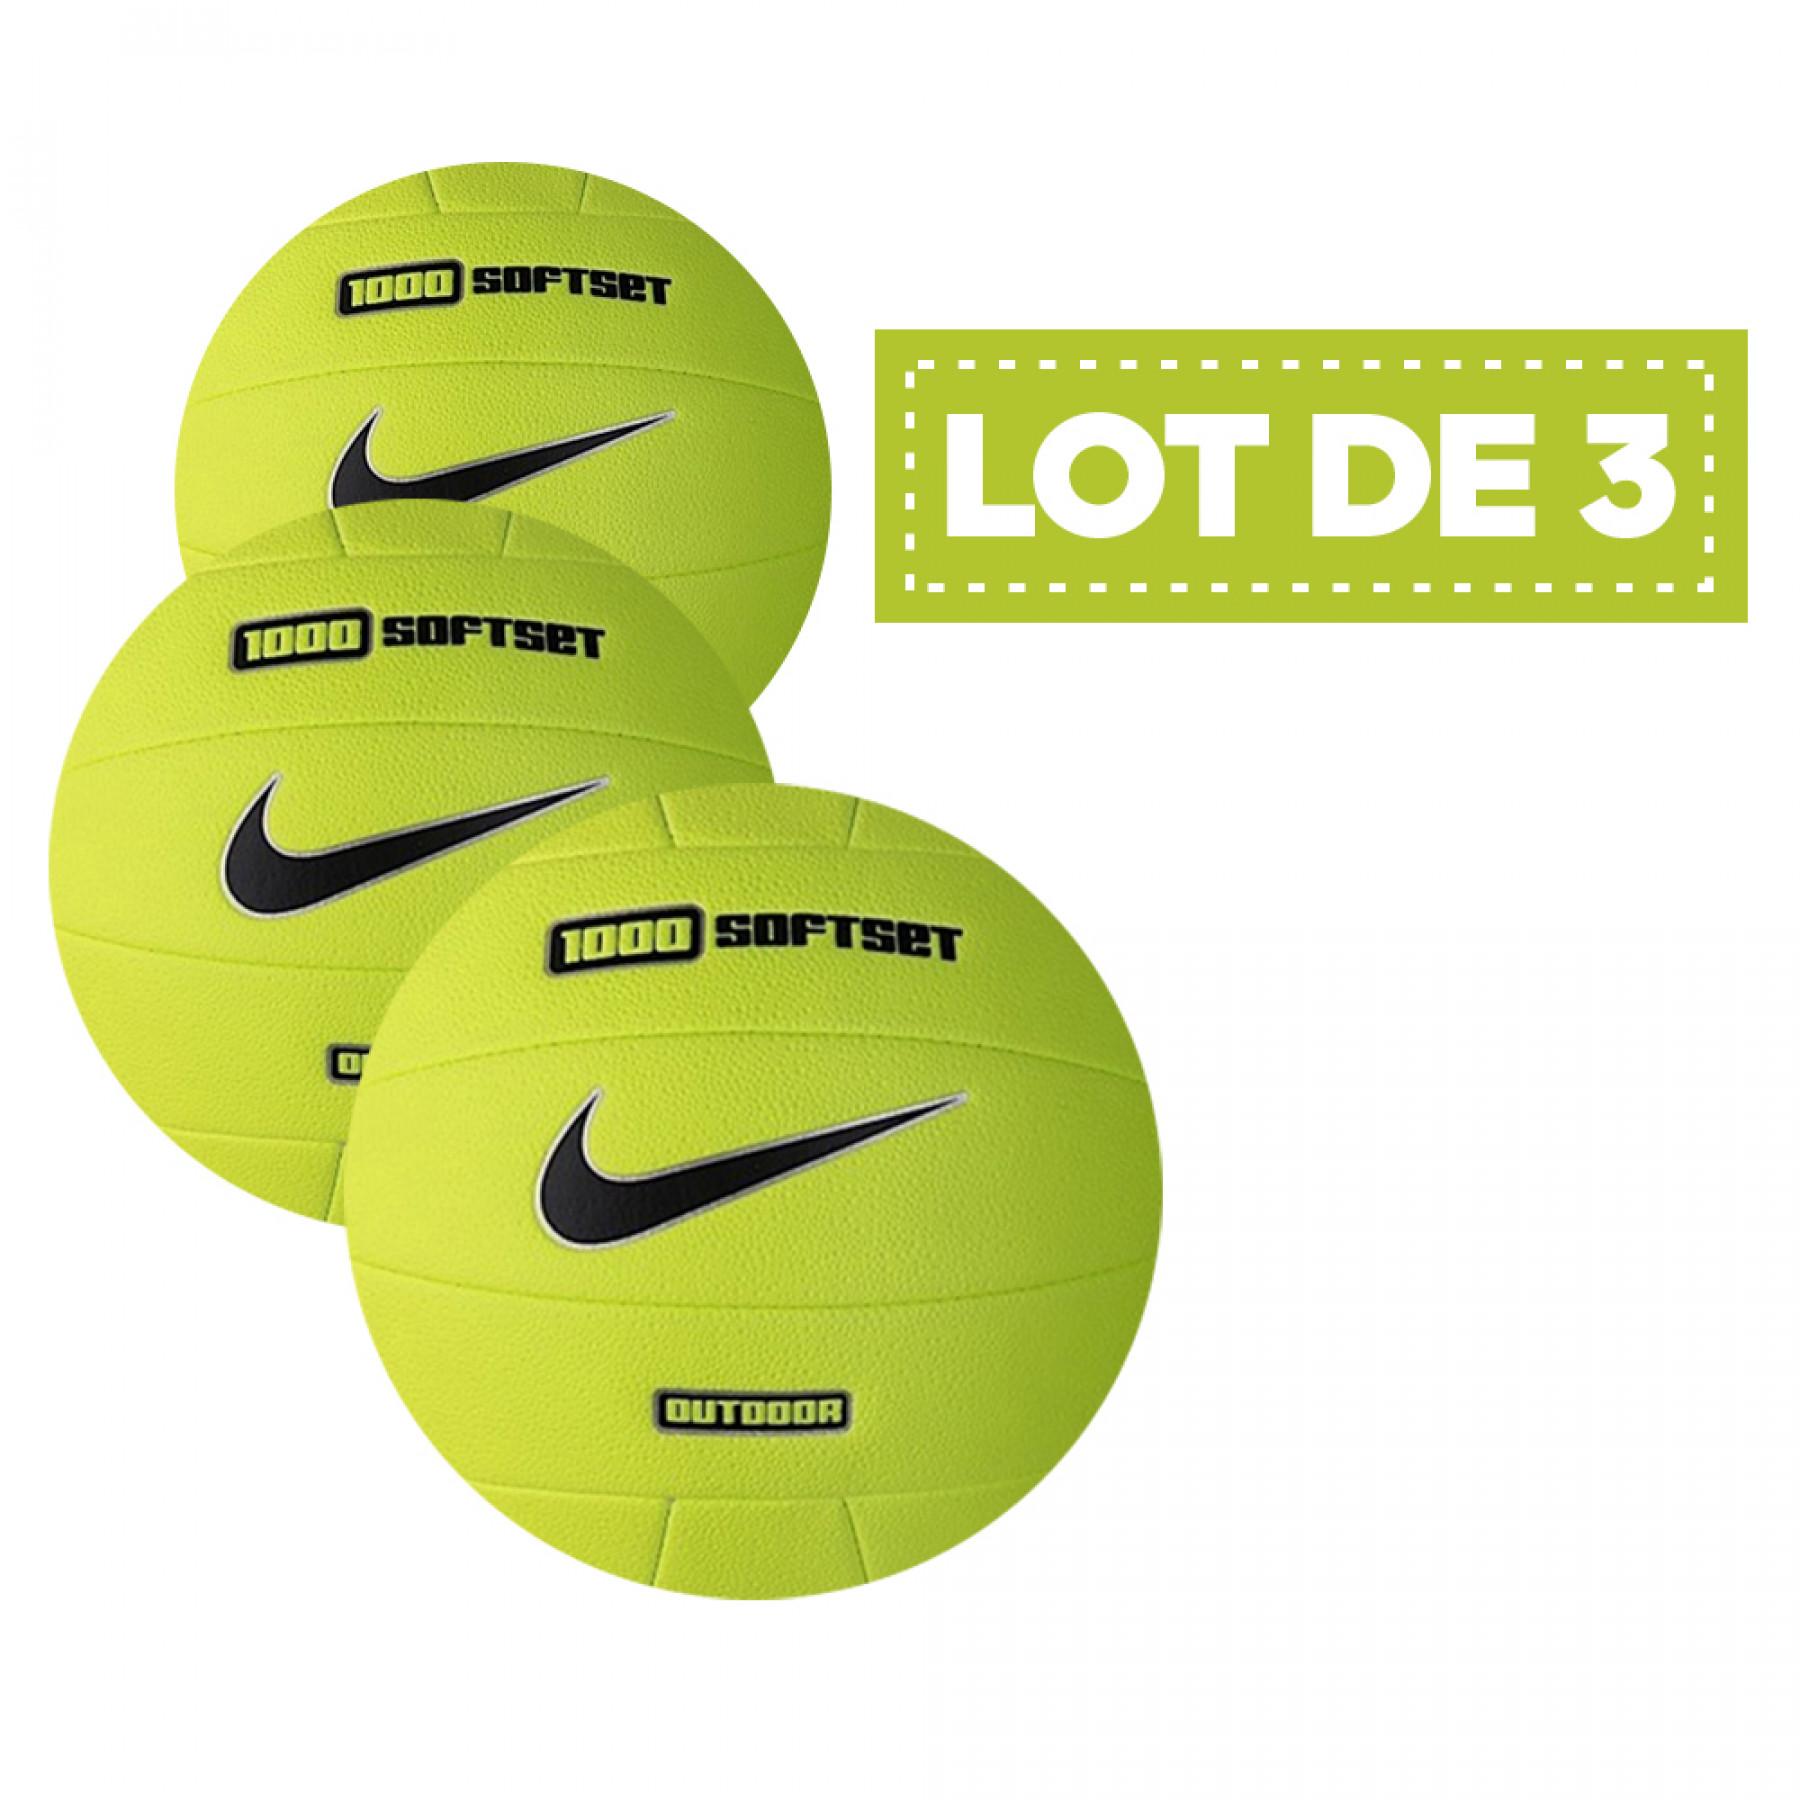 Conjunto de 3 balões Nike 1000 softset outdoor jaune fluo